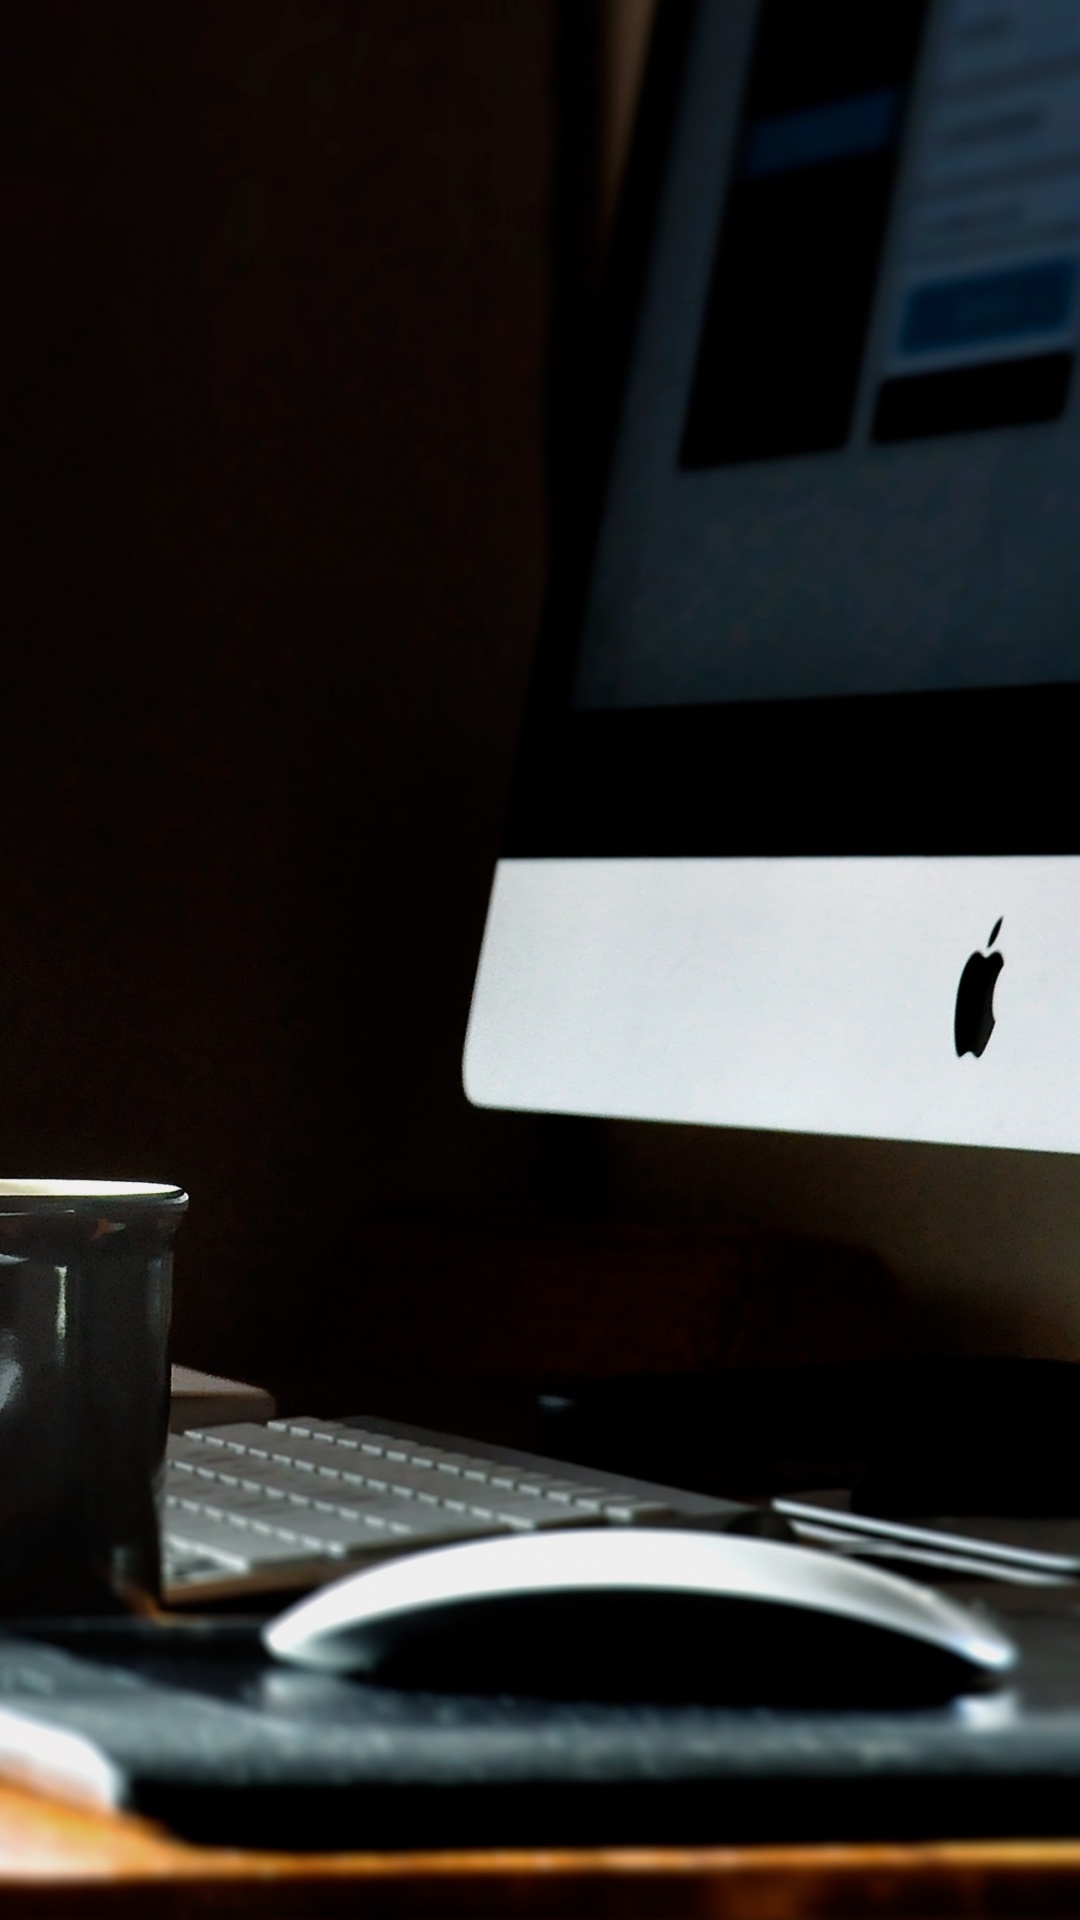 IMac, Apple, 咖啡杯, 电子设备, 小工具 壁纸 1080x1920 允许